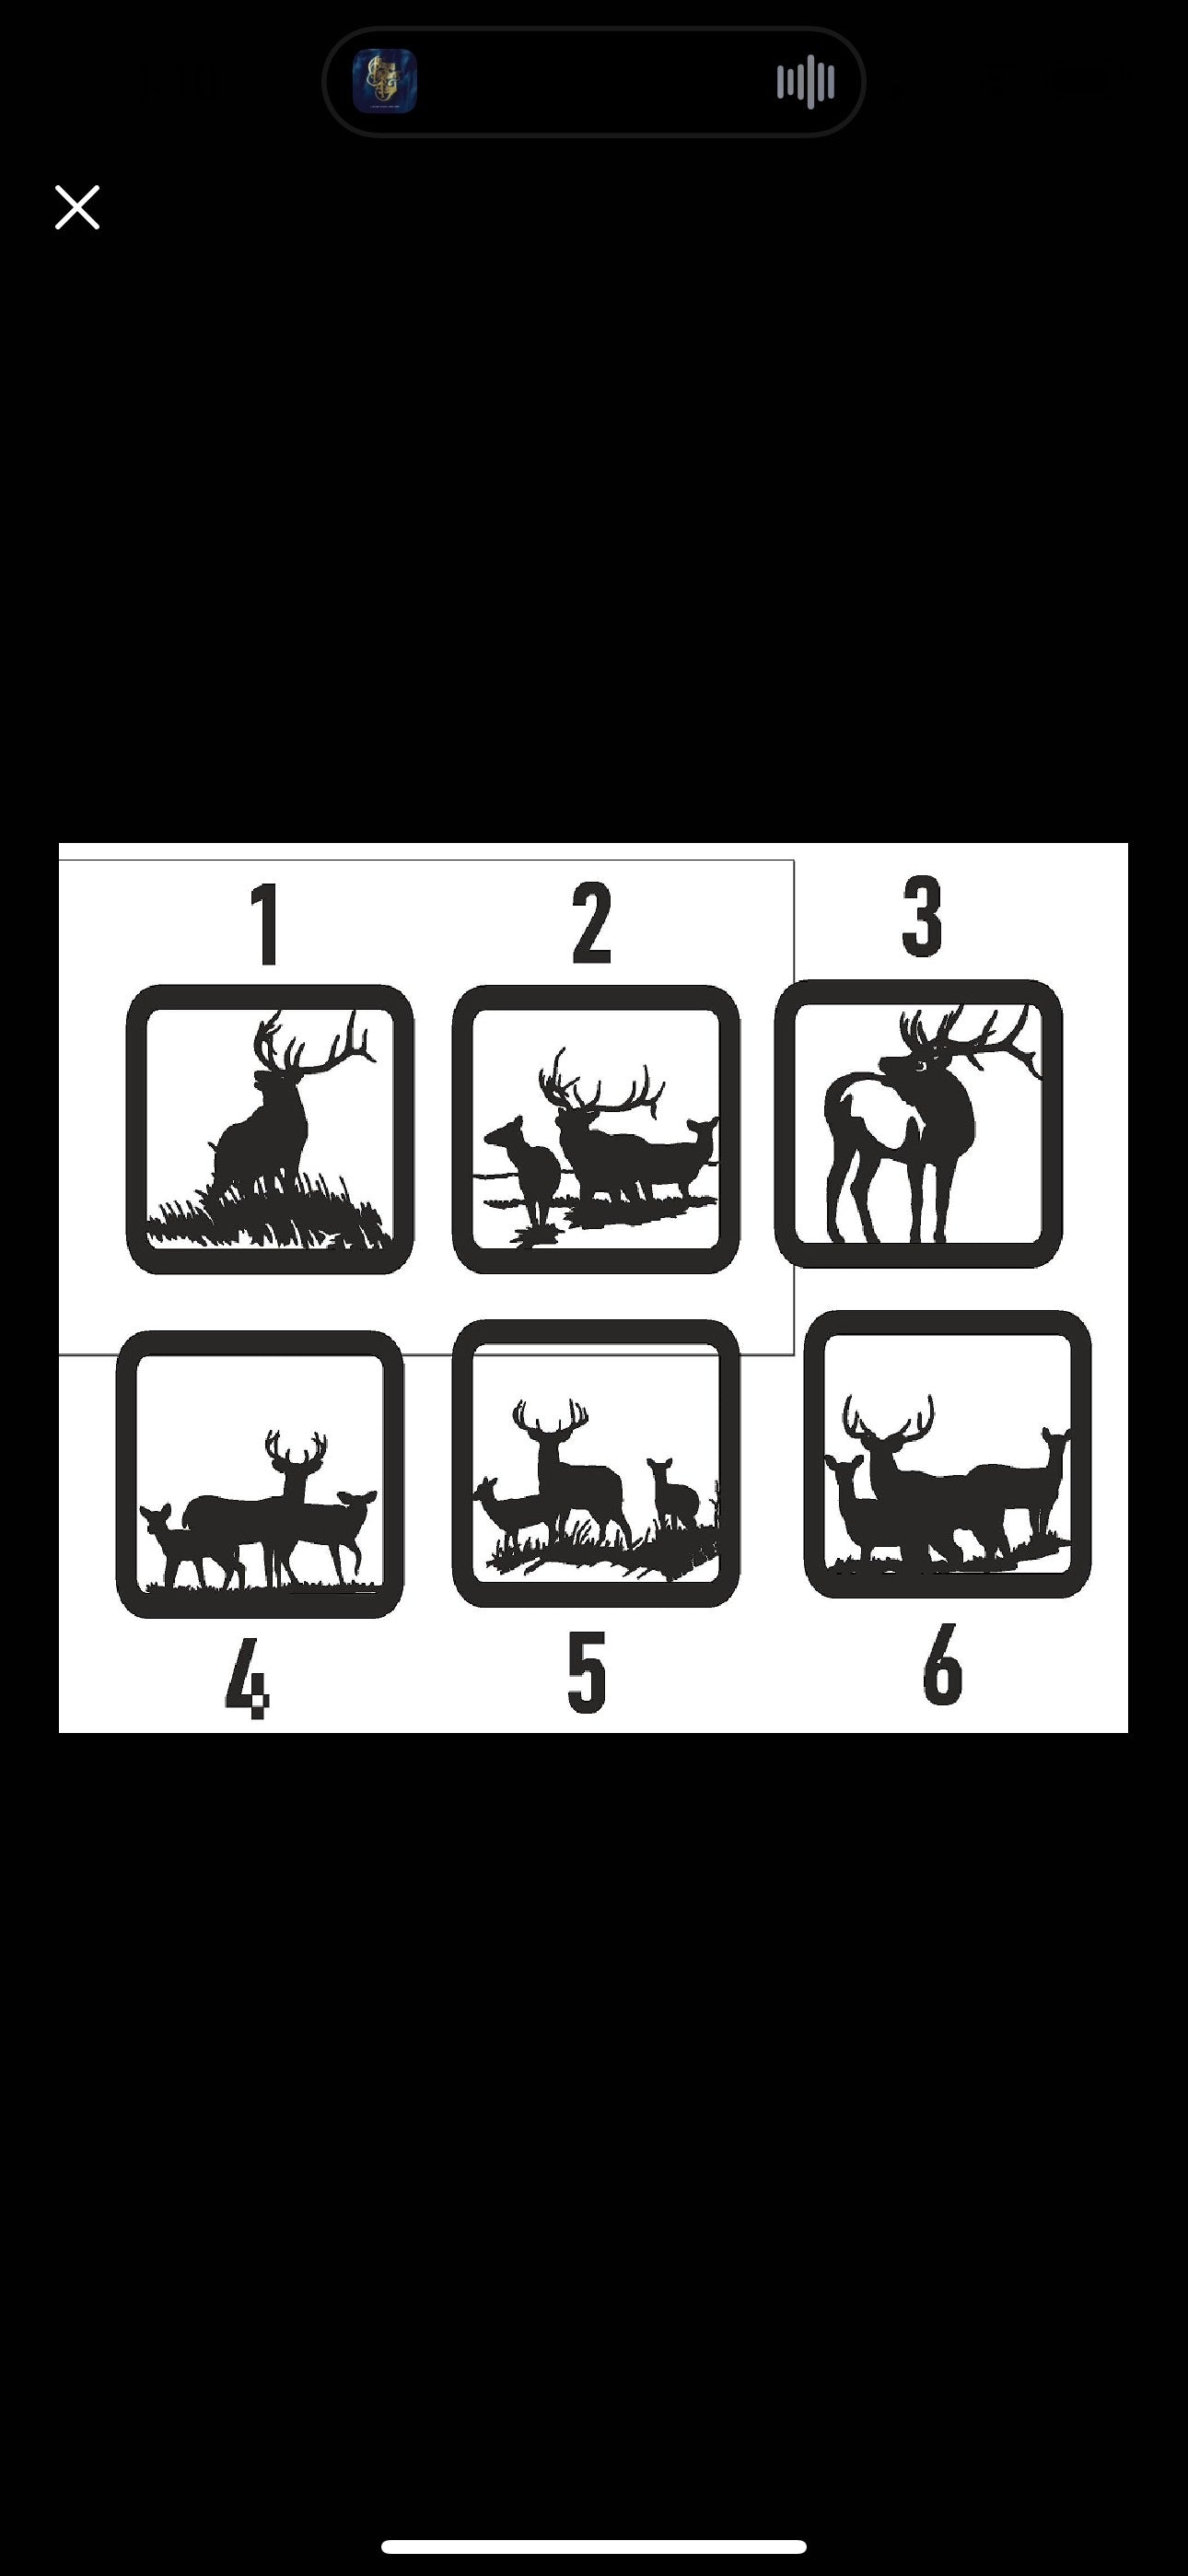 Custom Water Hose Hanger, Custom Garden Hose Holder, Elk or Deer Design, Your Color Choice, Post Mount or Wall Mount, Your Choice